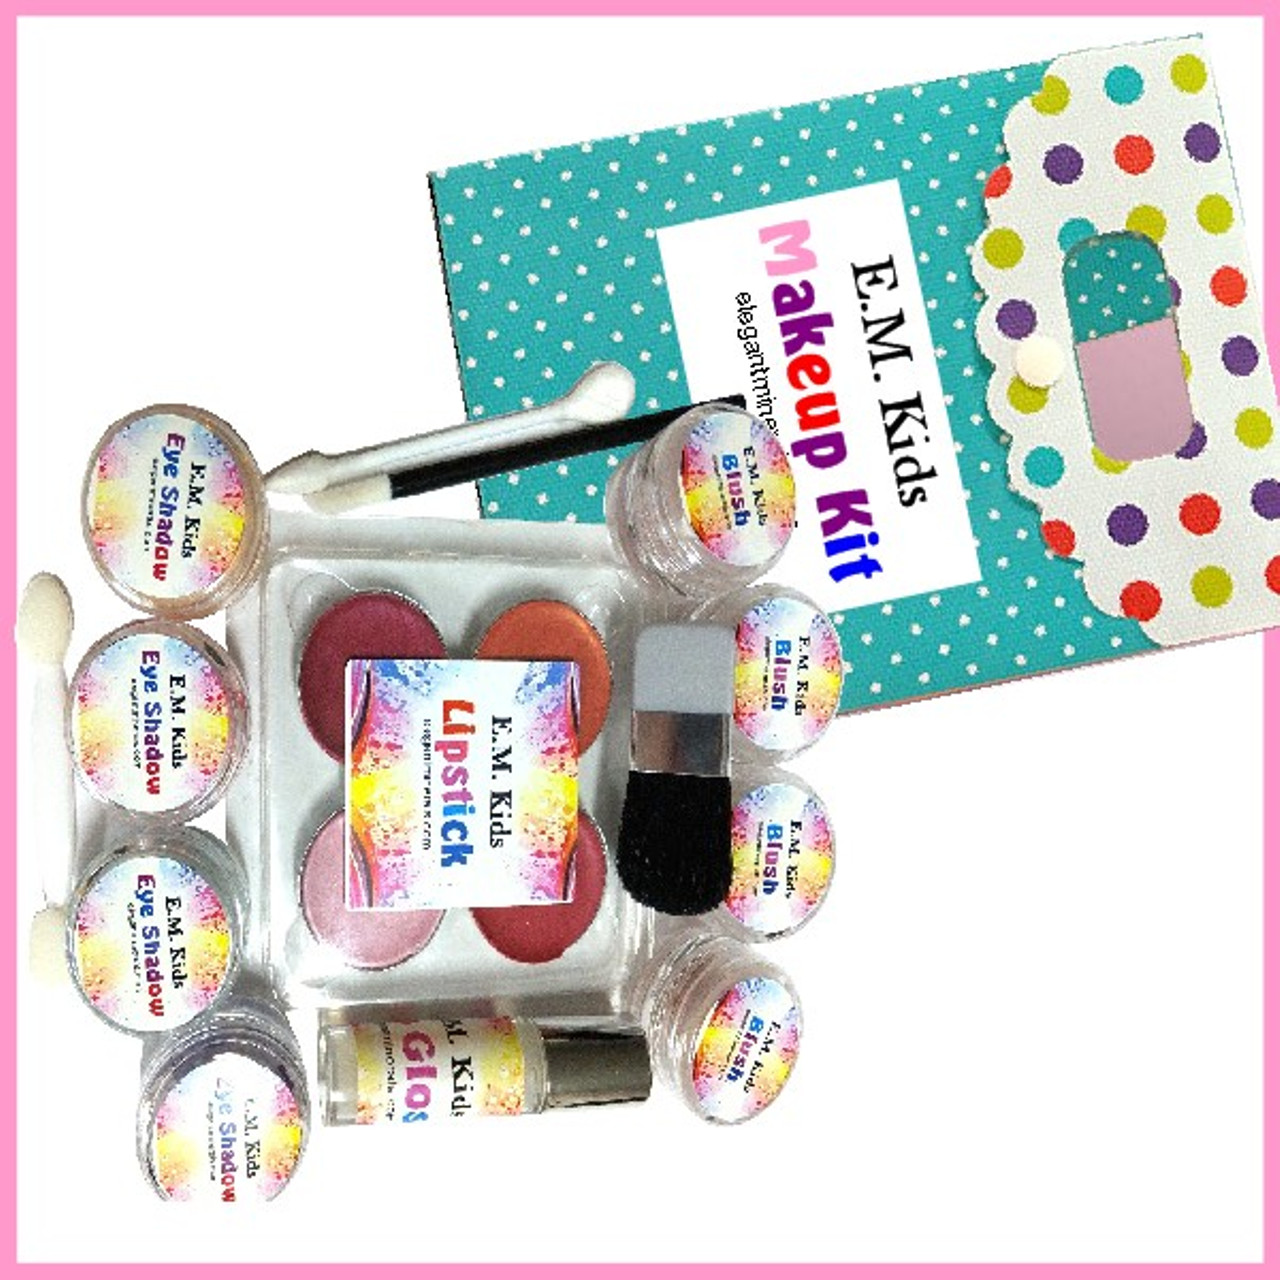 Natural Pretend Play Makeup Kit for Girls Paraben-free, DYE-free, Made in  USA